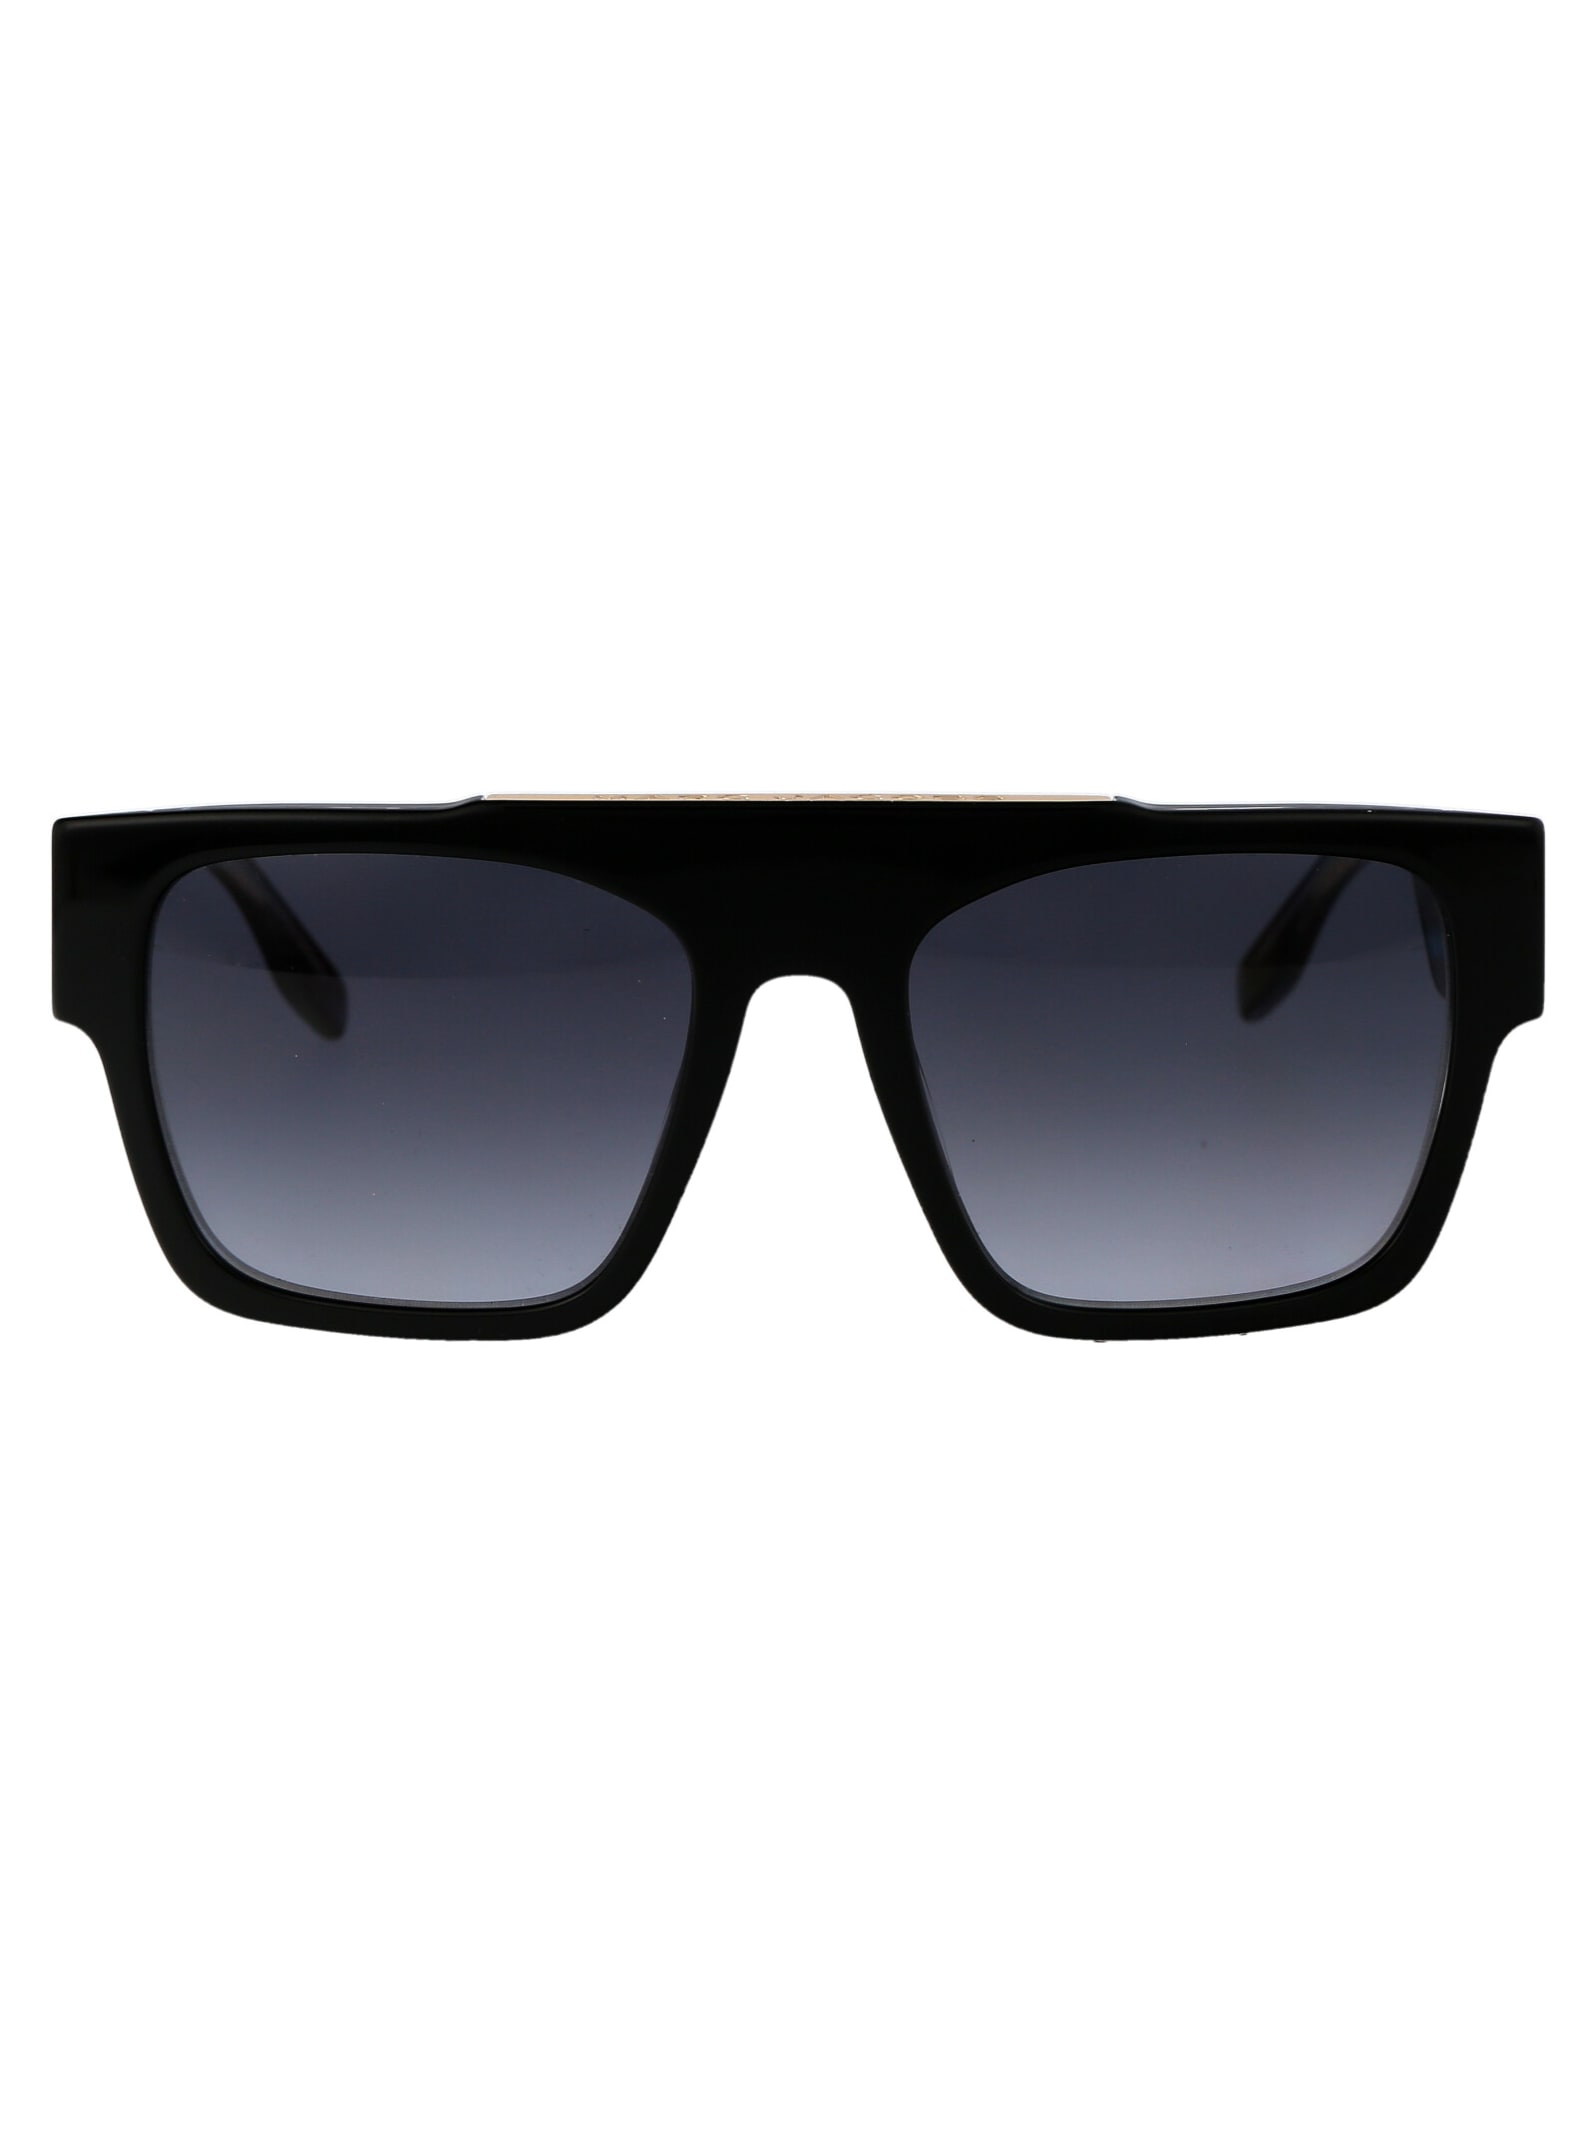 Marc 757/s Sunglasses